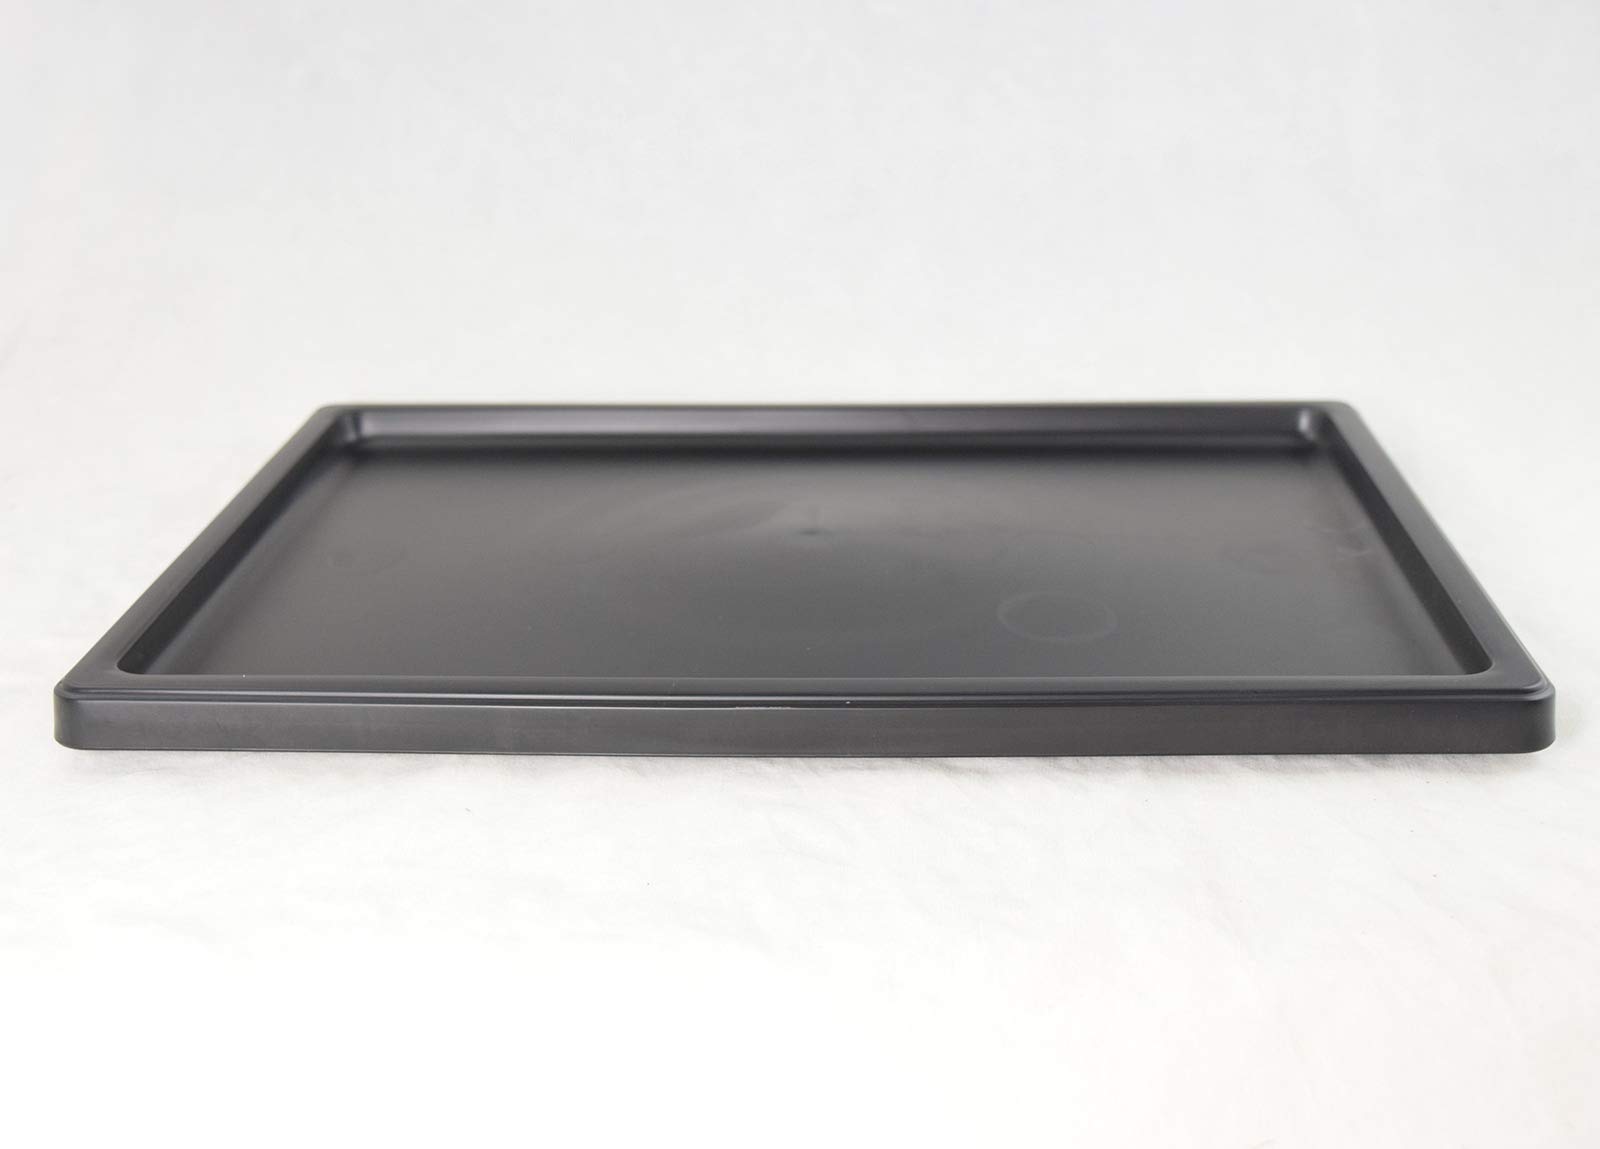 Japanese Black Plastic Humidity/Drip Tray for Bonsai Tree 13.25"x 9.25"x 0.75"